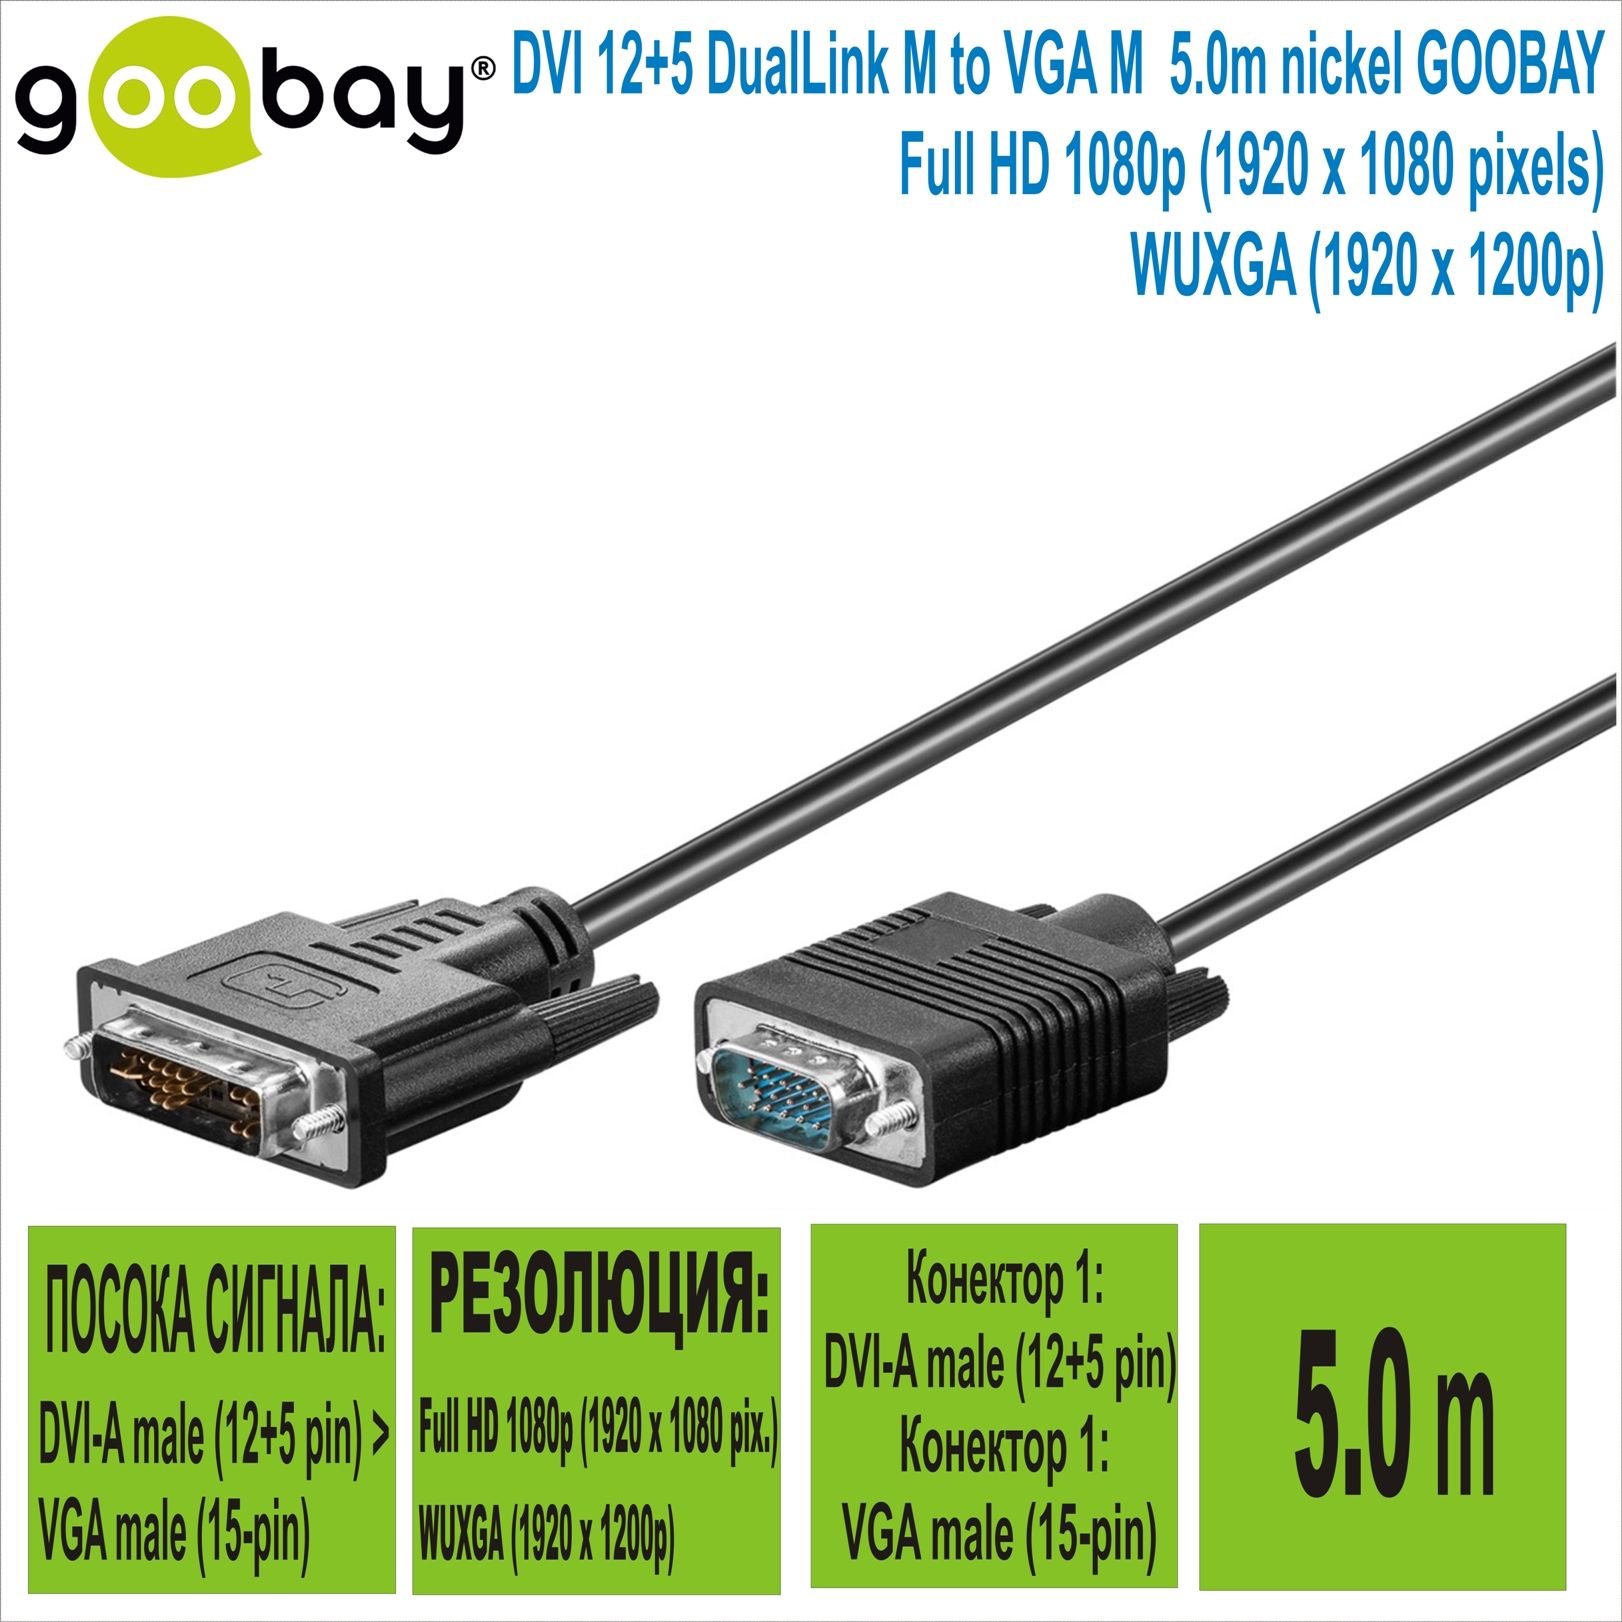 DVI 24+5 DualLink M to VGA M  5.0m nickel GOOBAY